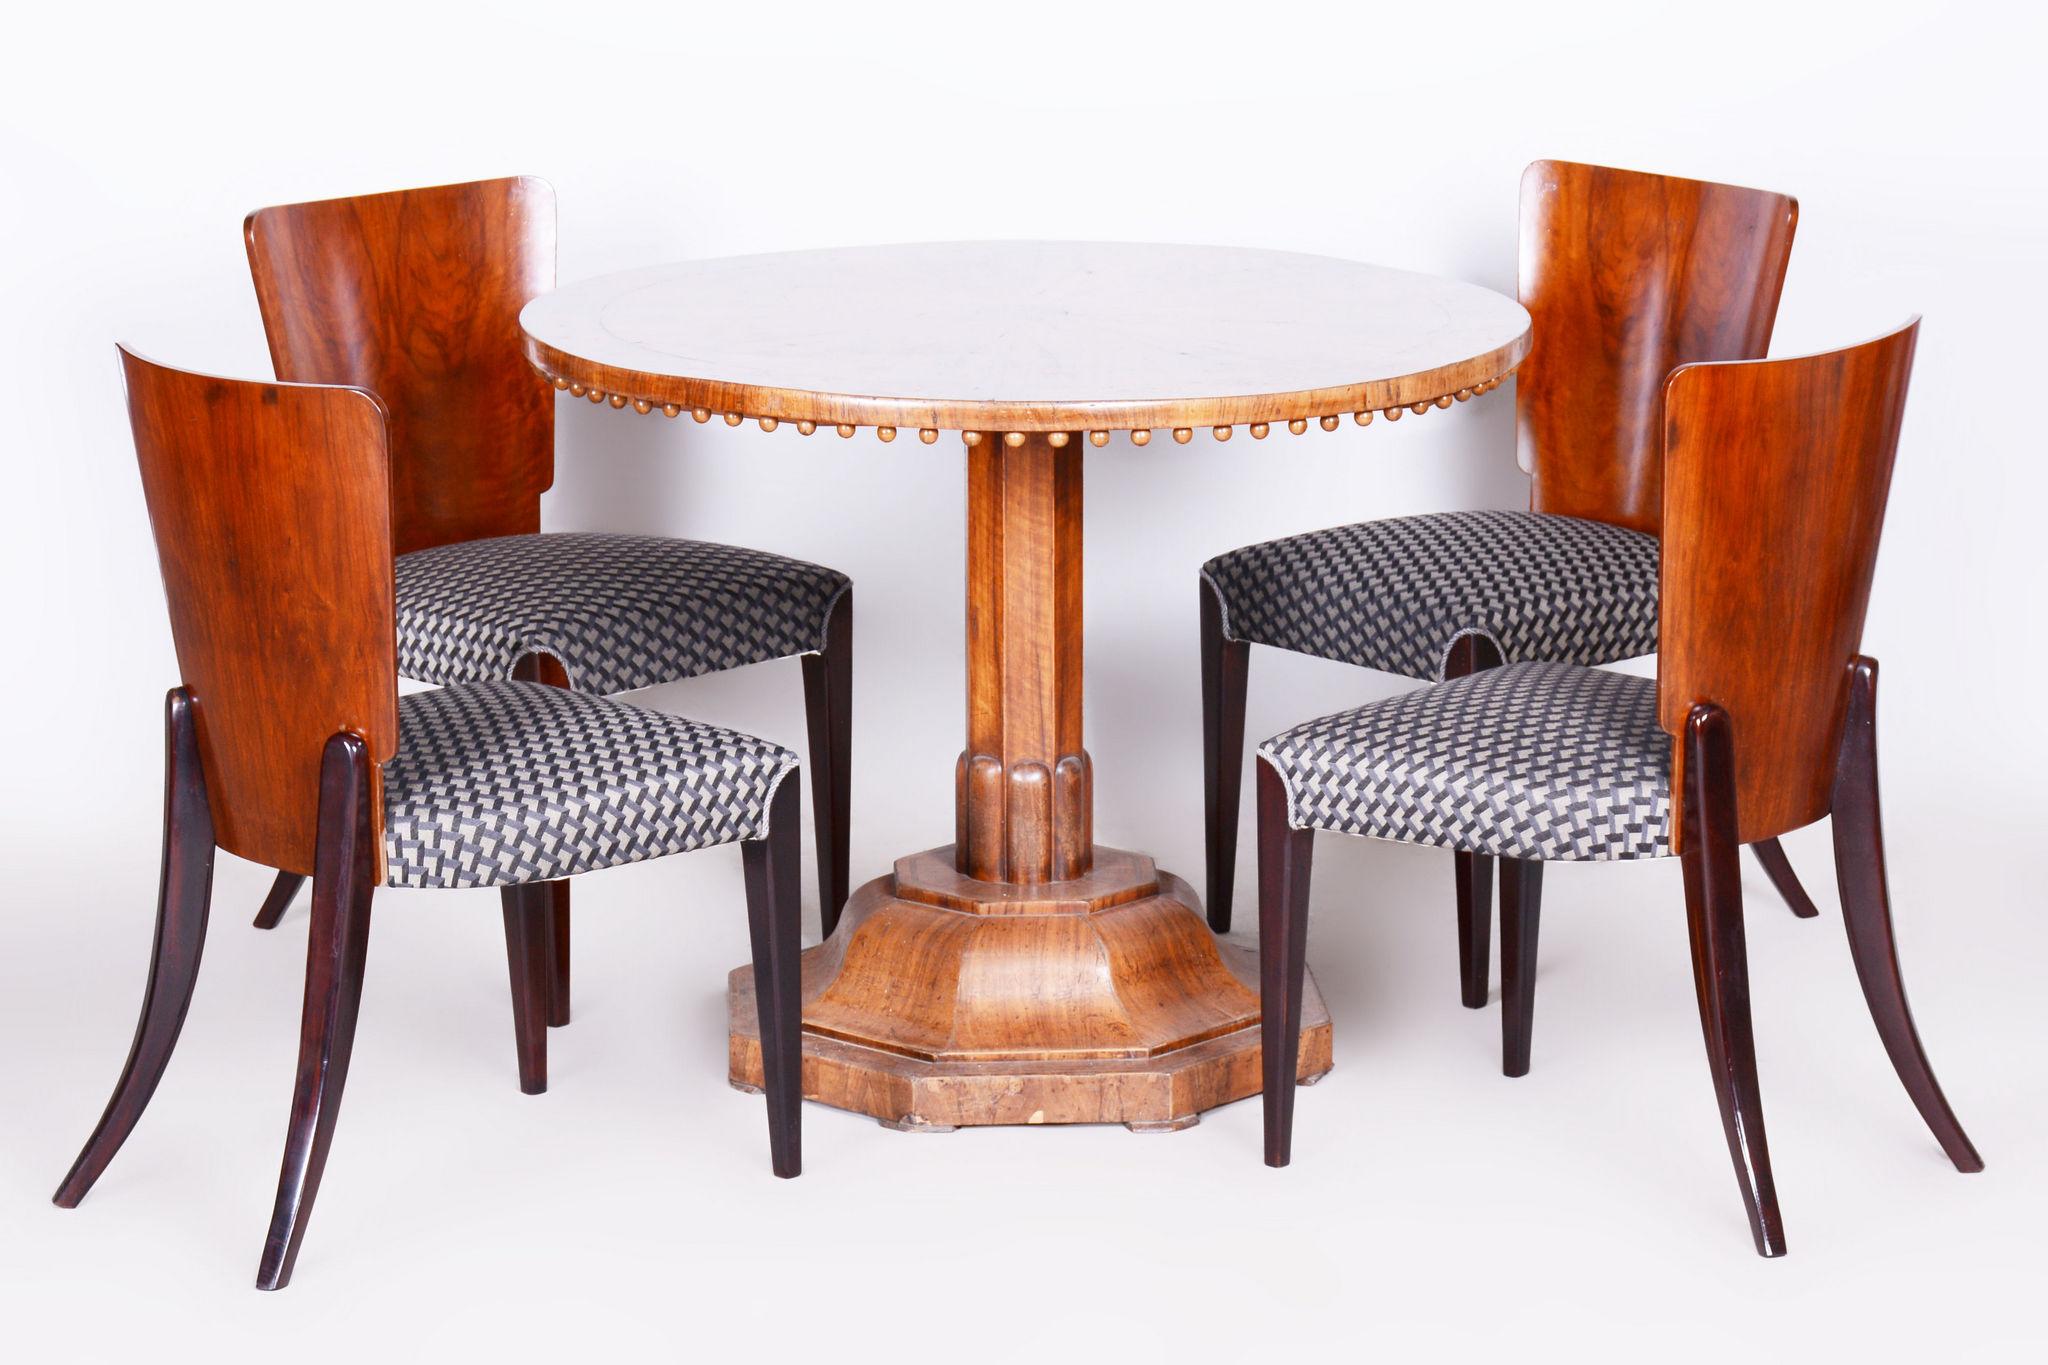 Set of Four Restored ArtDeco Chairs, Halabala, UP Zavody, Beech, Czechia, 1930s For Sale 6